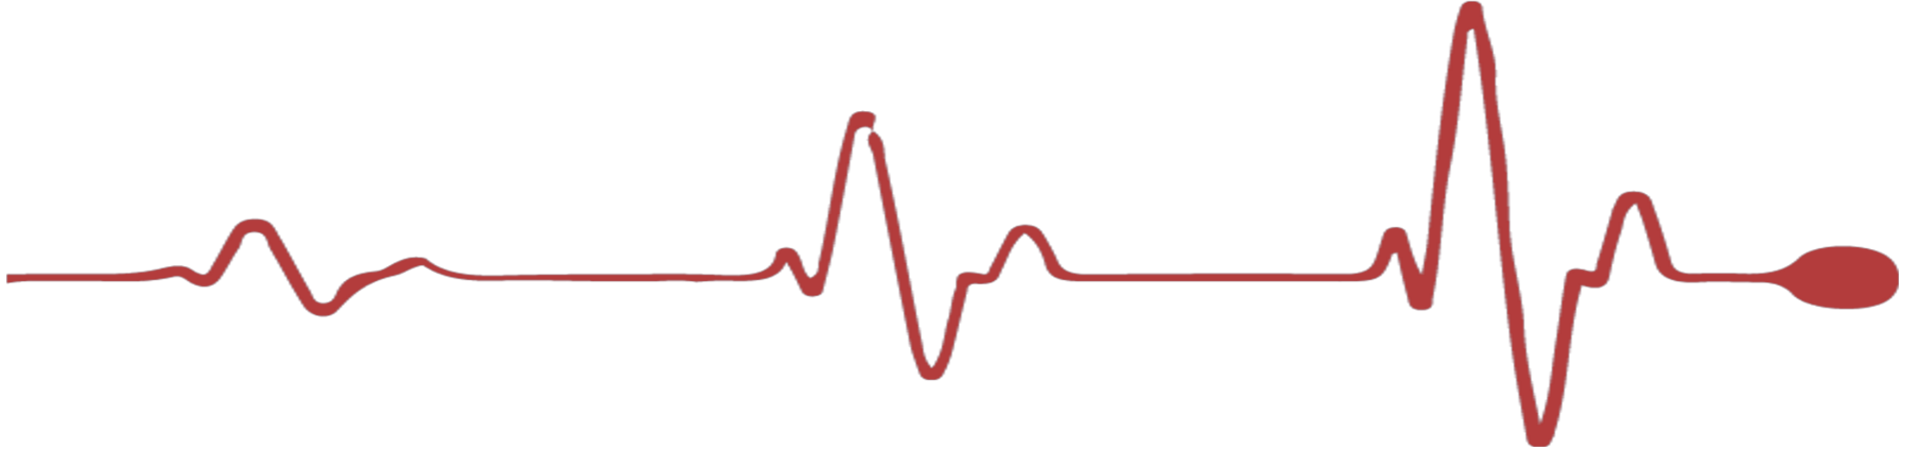 Heartbeat Transparent Image